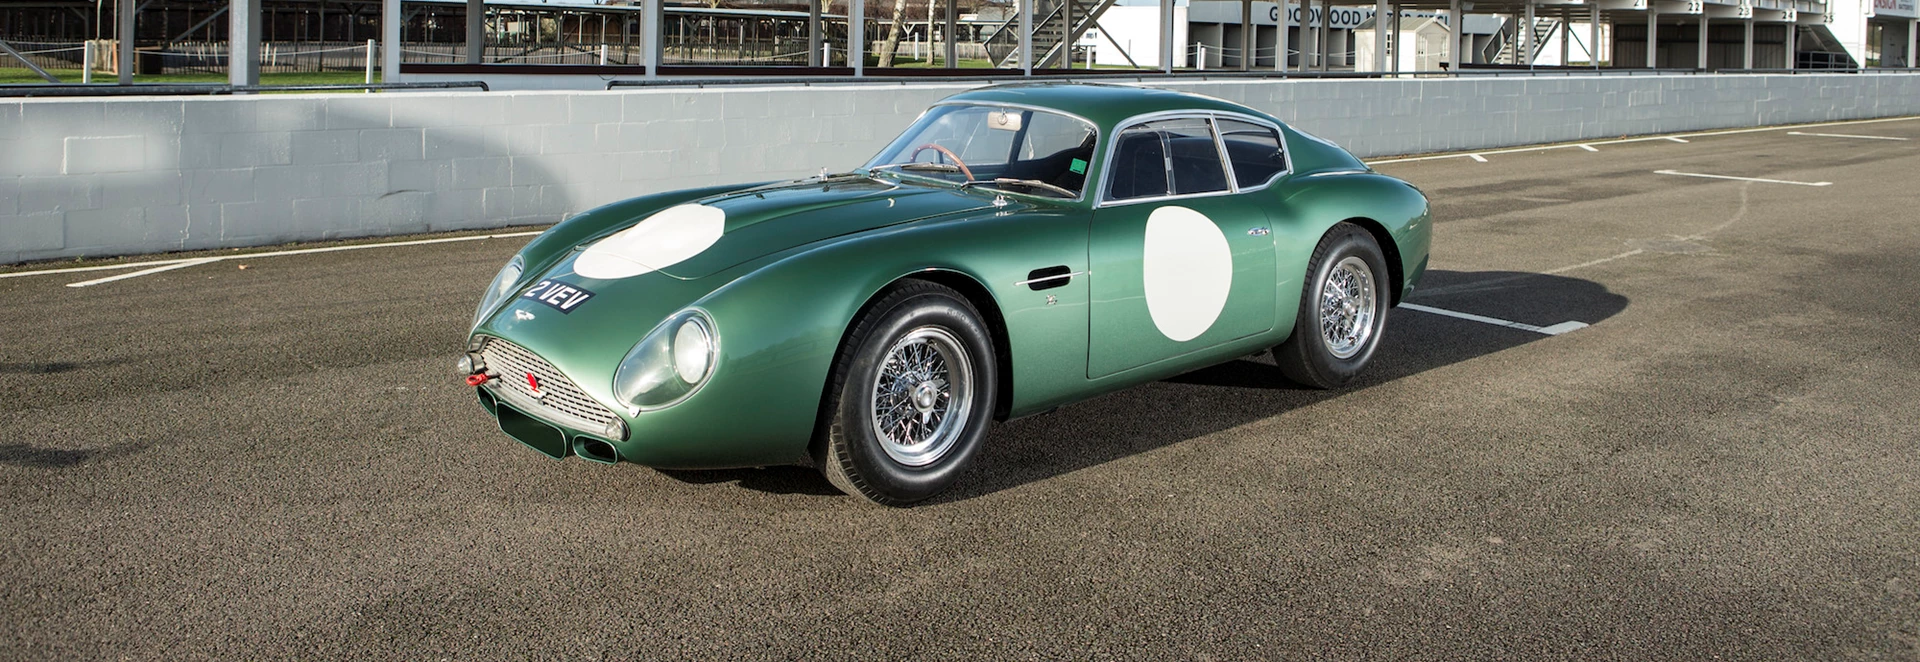 Rare Aston Martin DB4GT Zagato to go up for auction